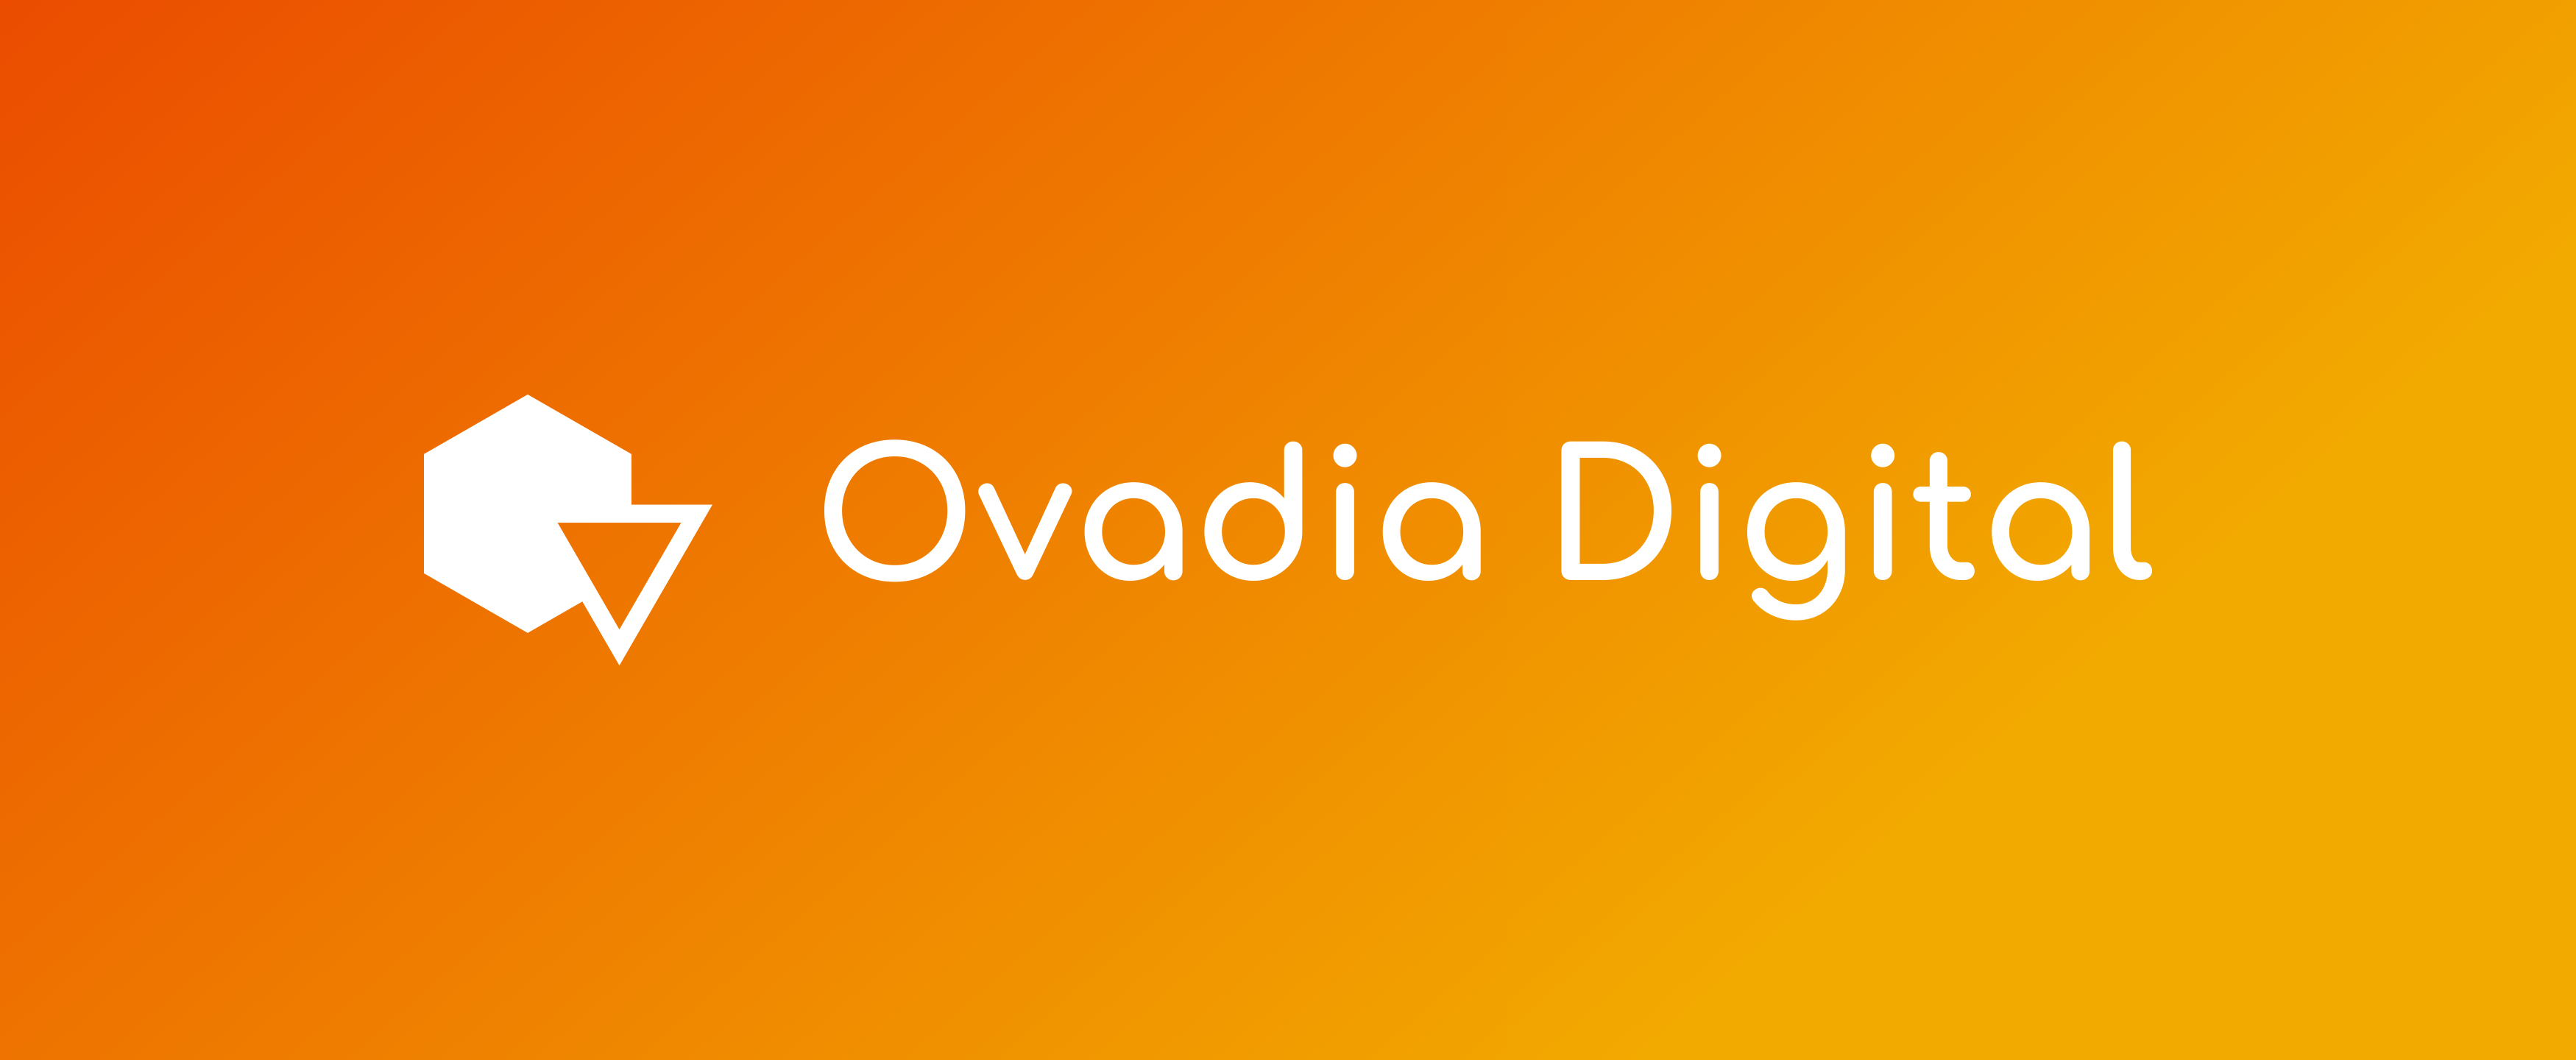 Ovadia Digital Marketing Agency Miami